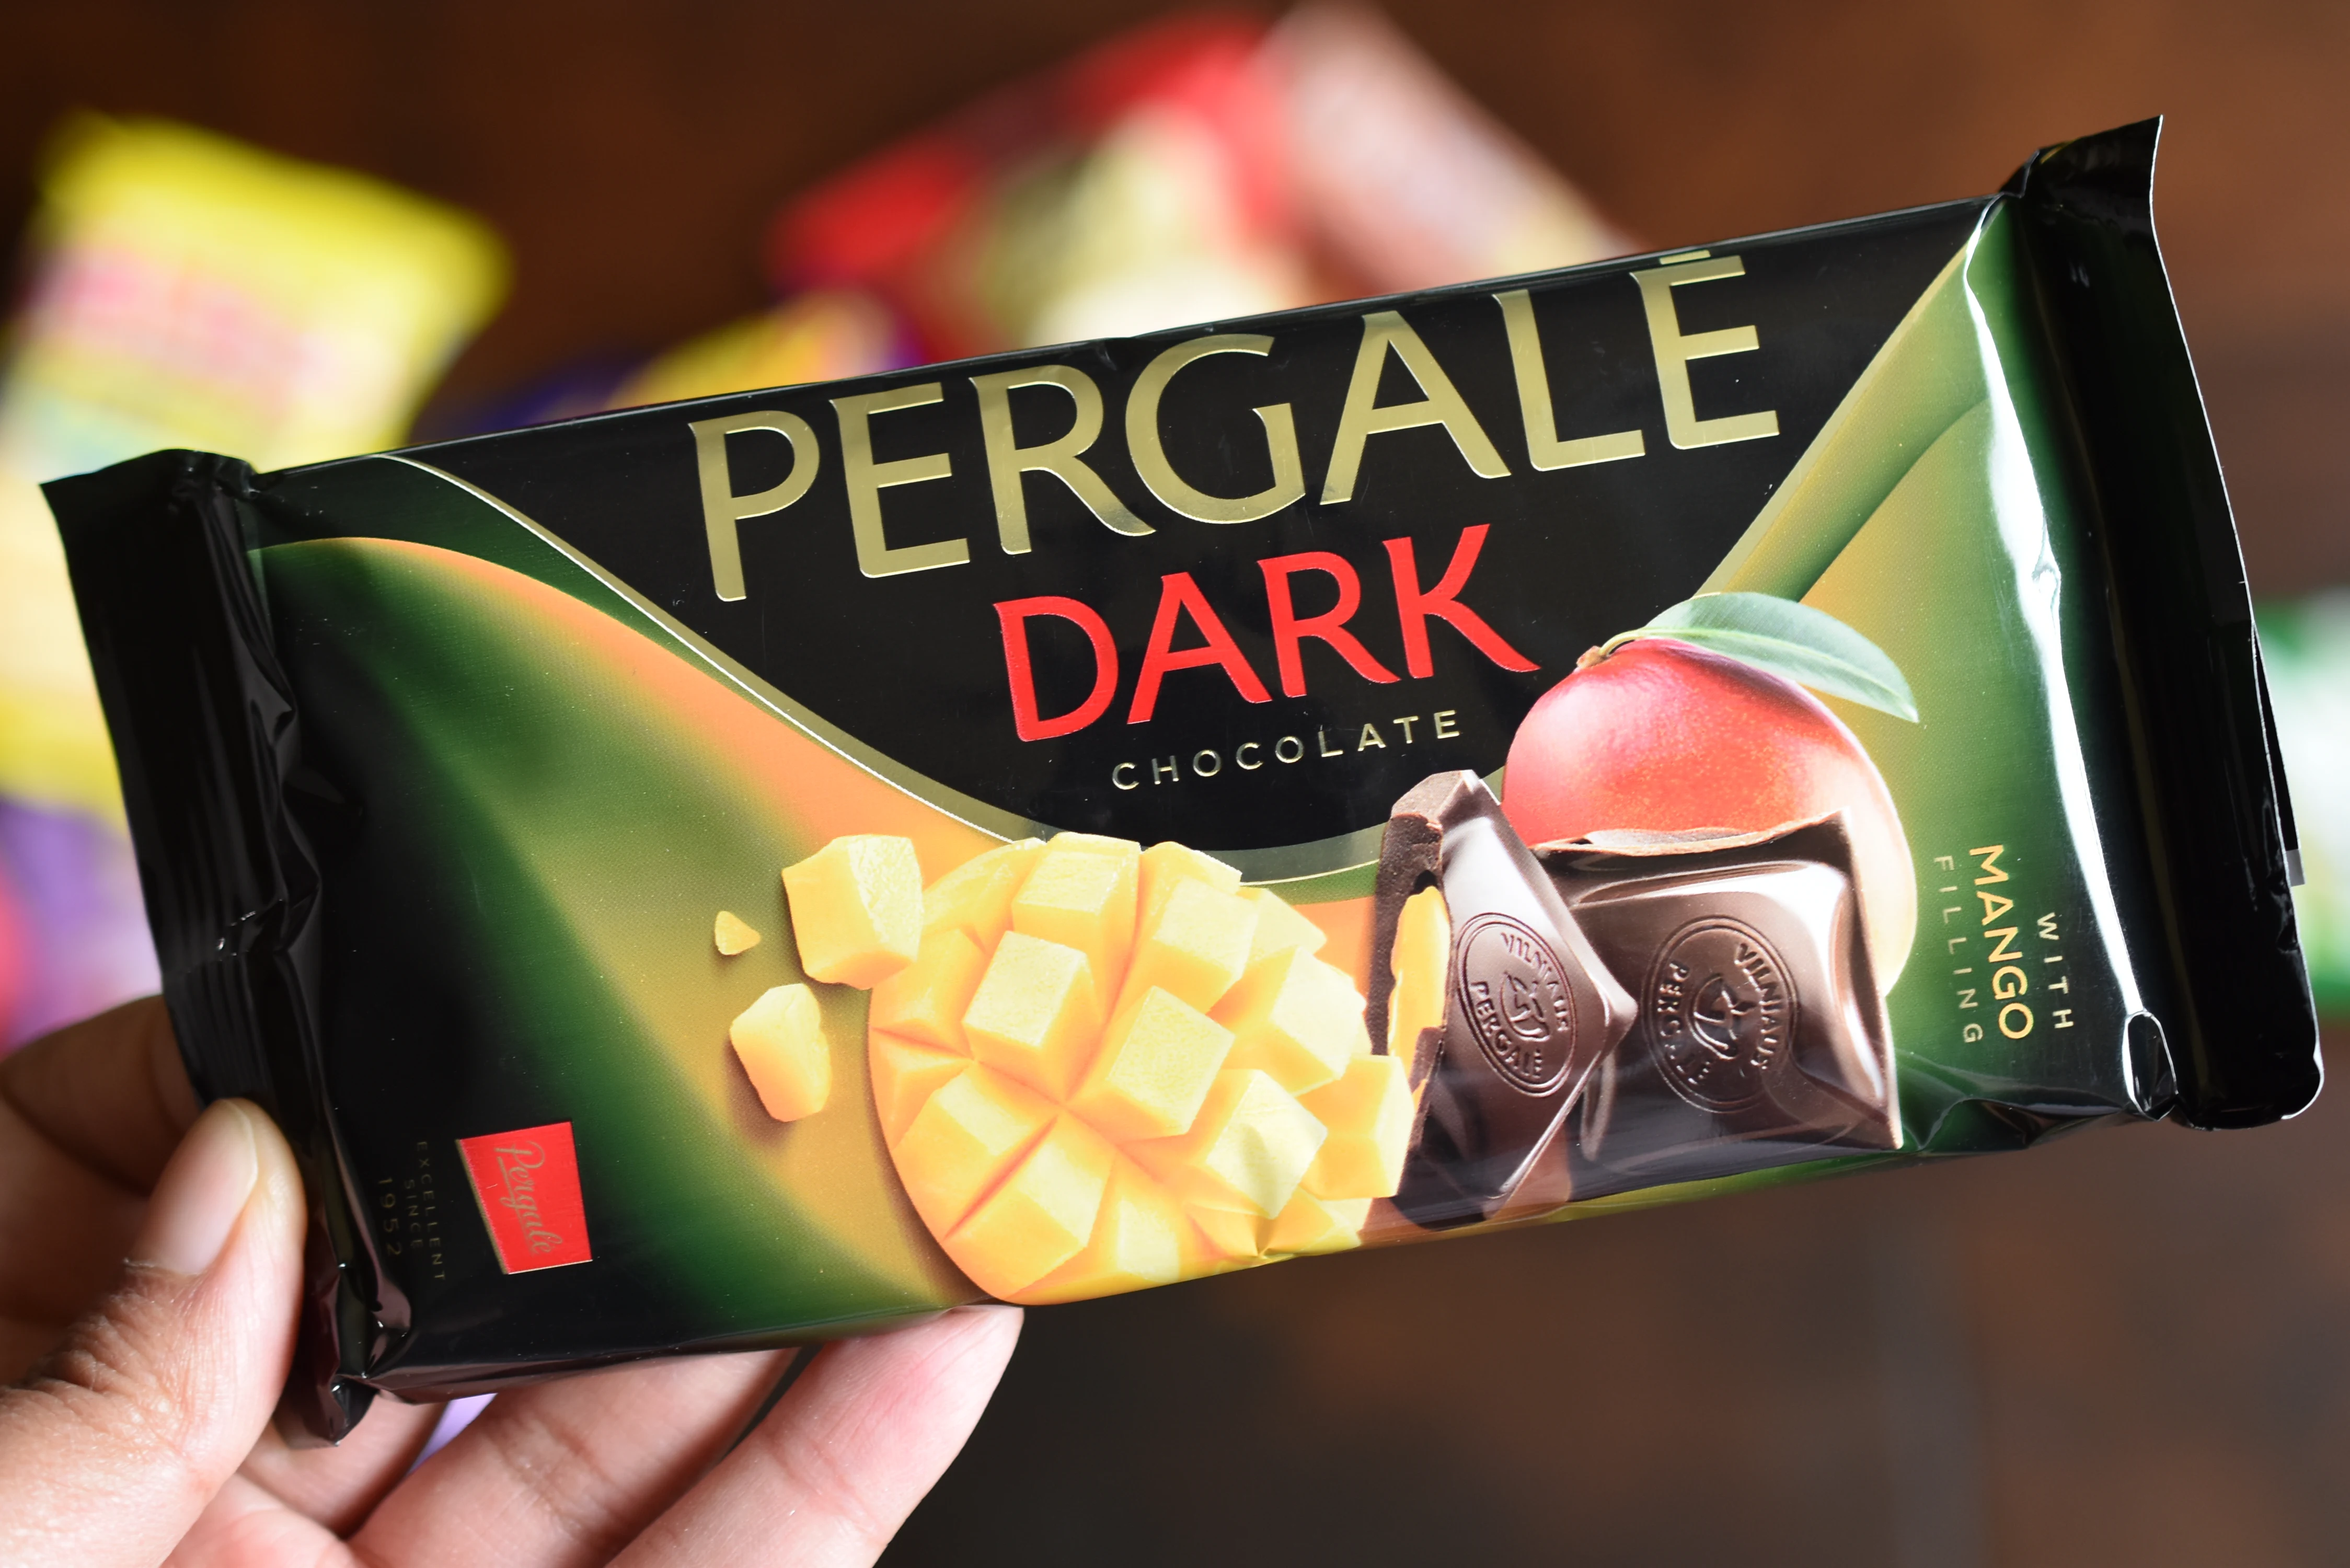 Pergale Dark Chocolate Mango from Lituania